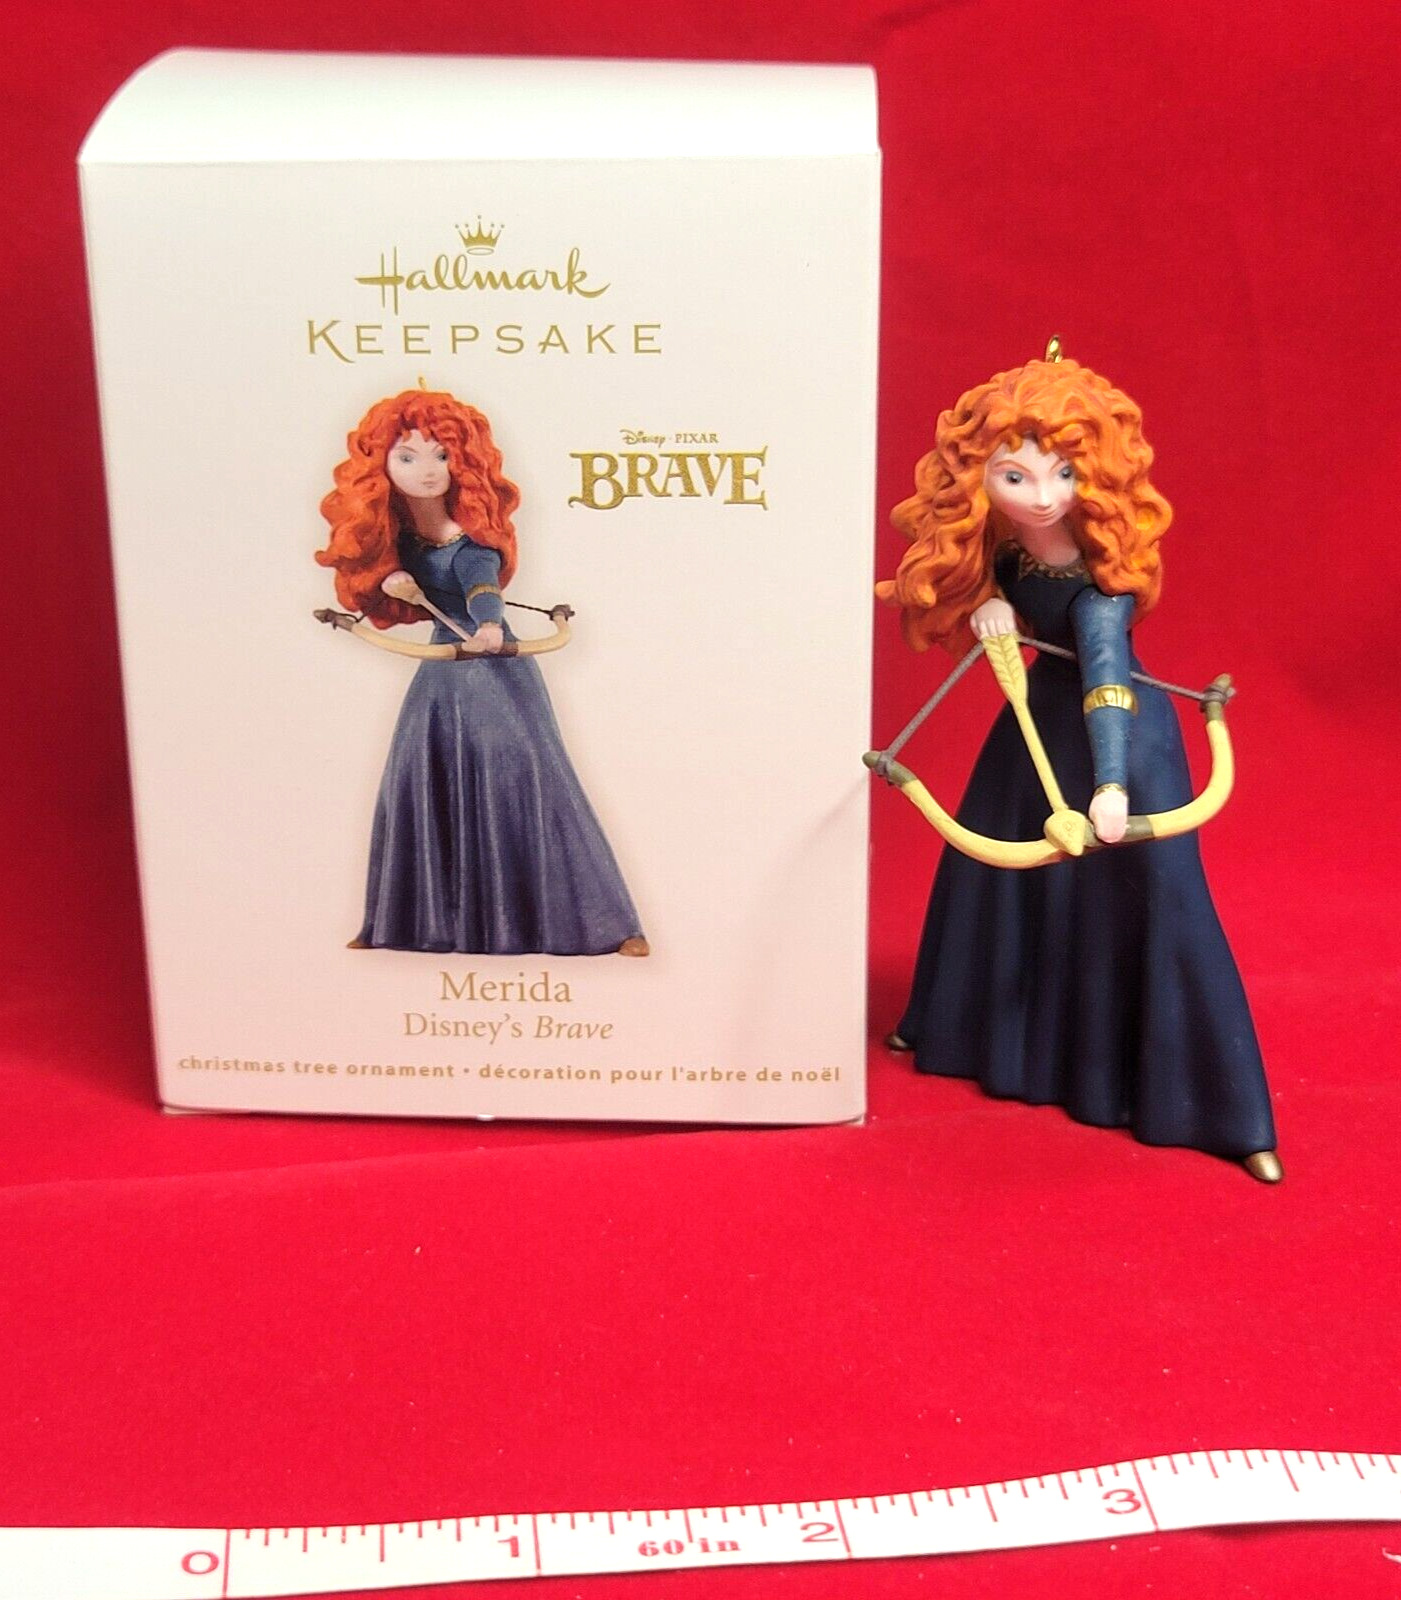 2012 Disney Brave Merida Hallmark Keepsake Ornament with box and plastic insert